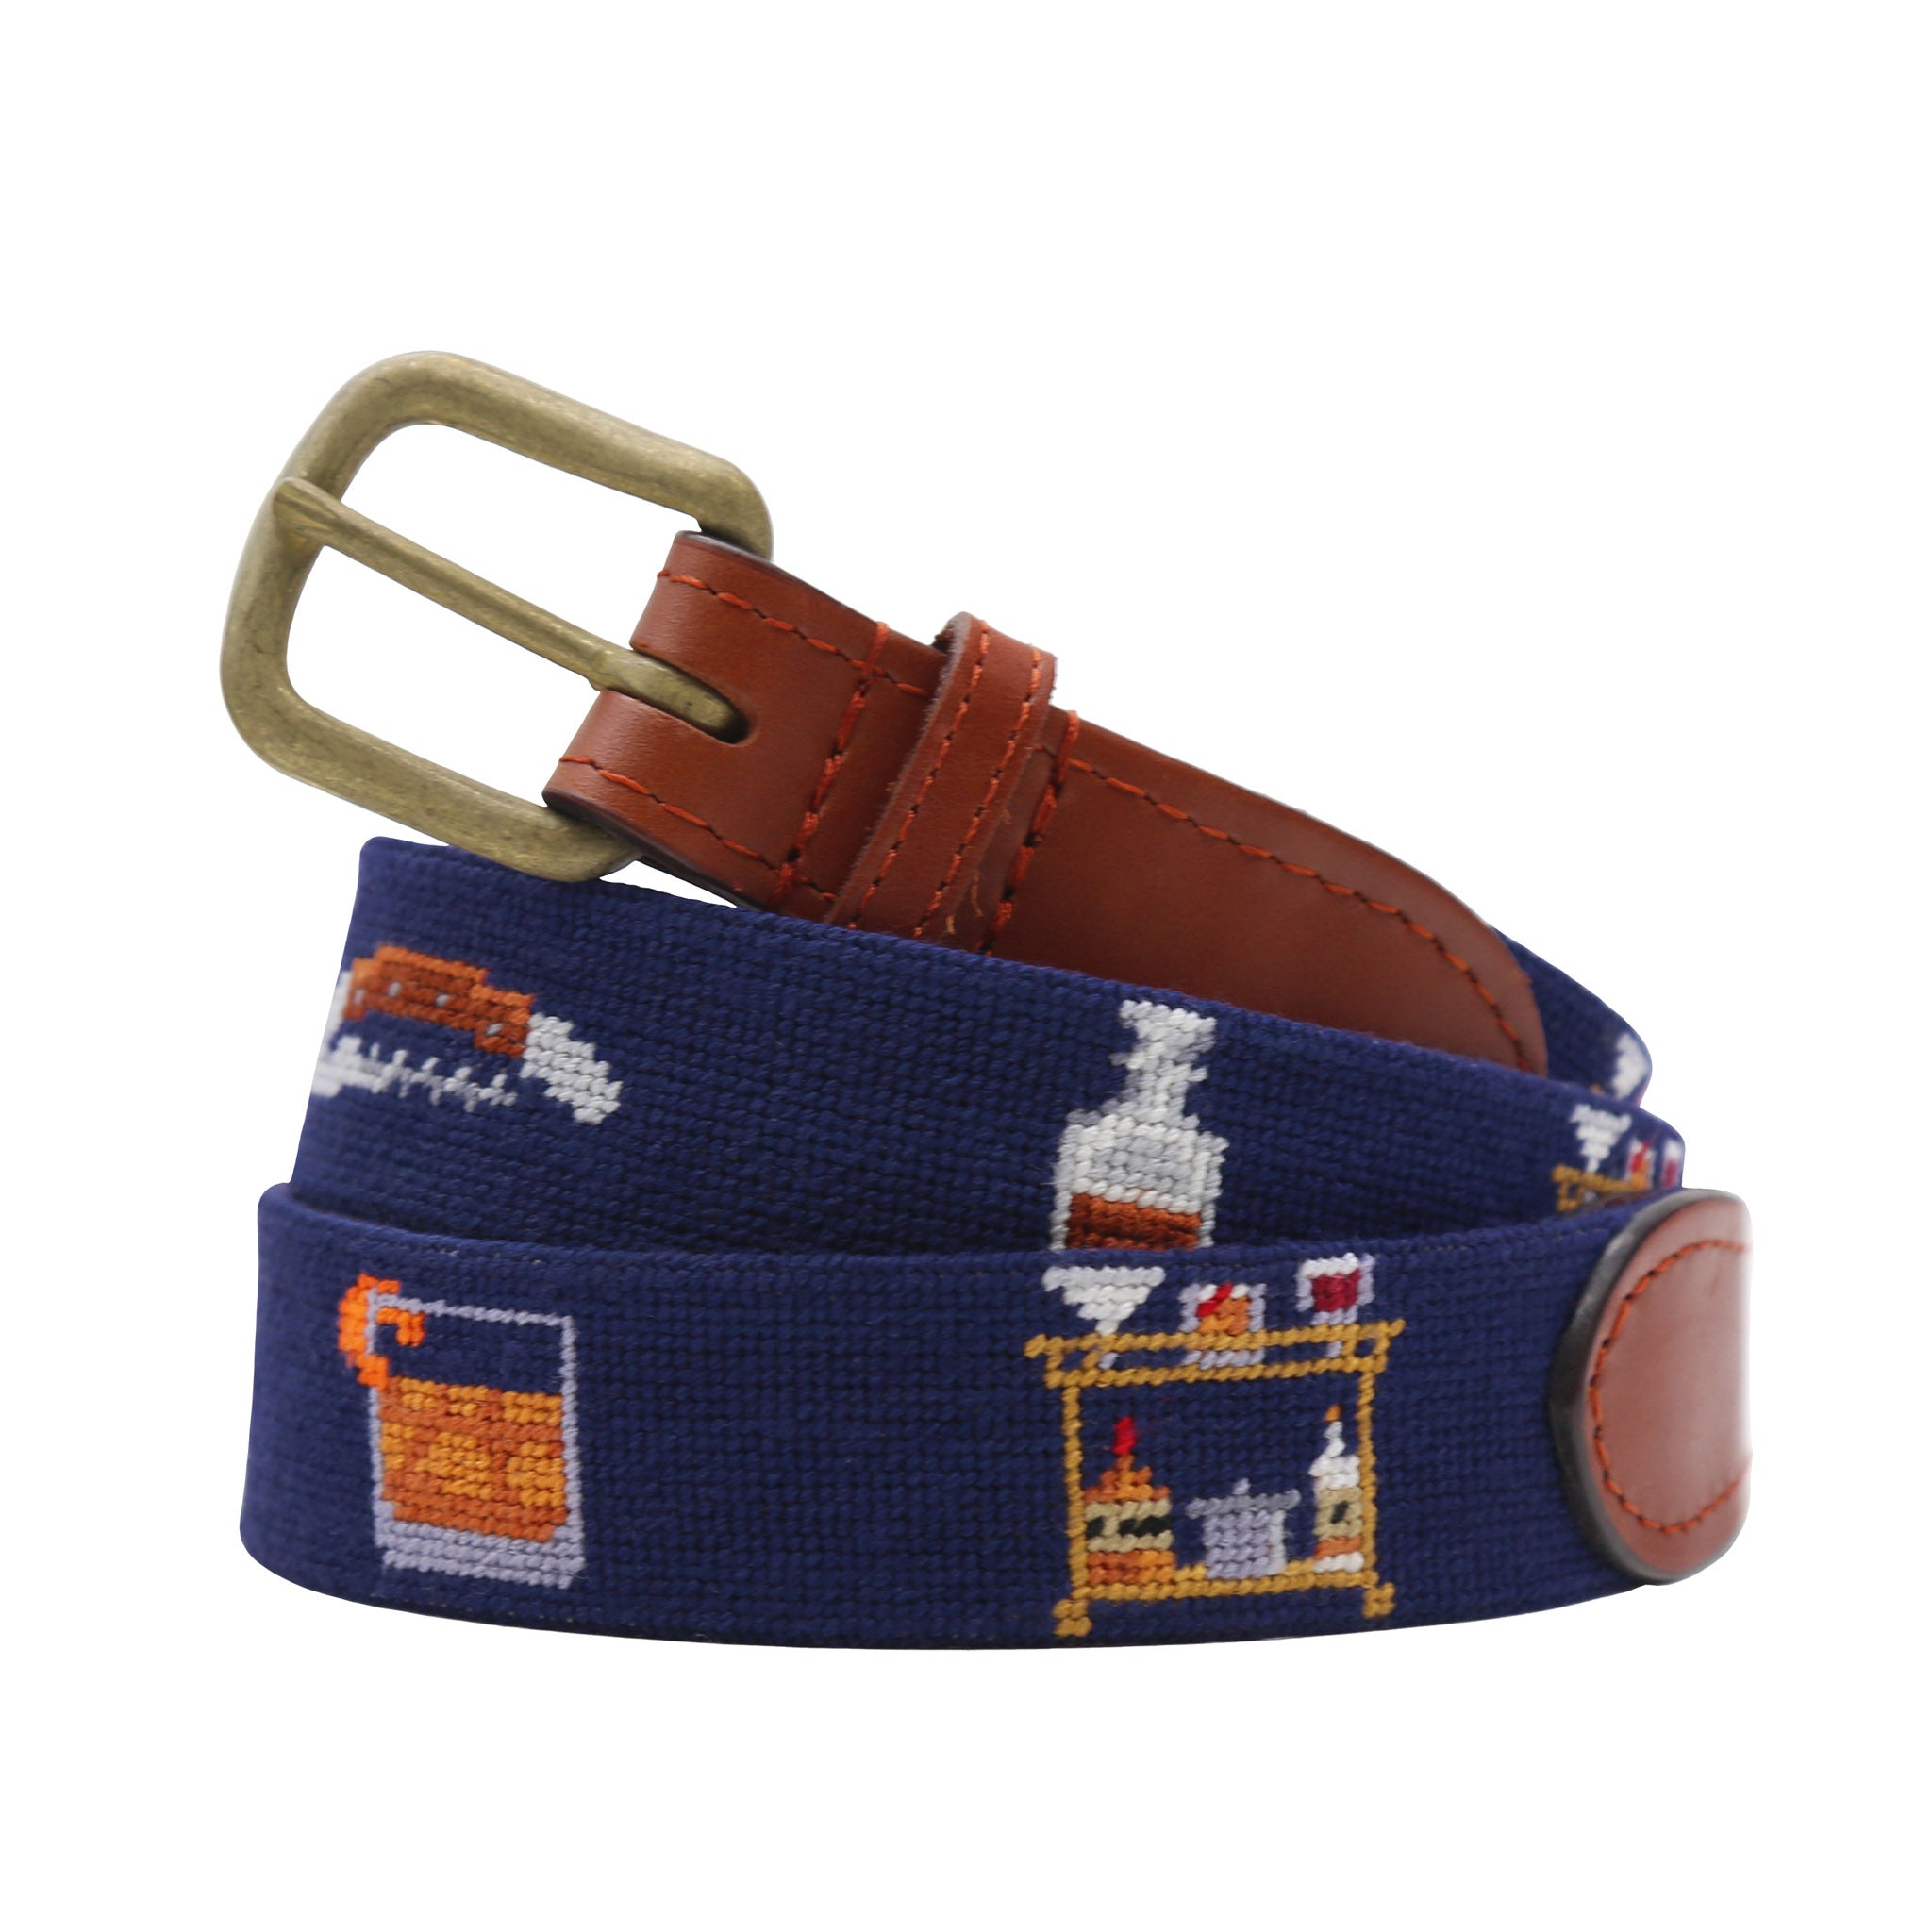 Smathers & Branson Needlepoint Belts - Accessories